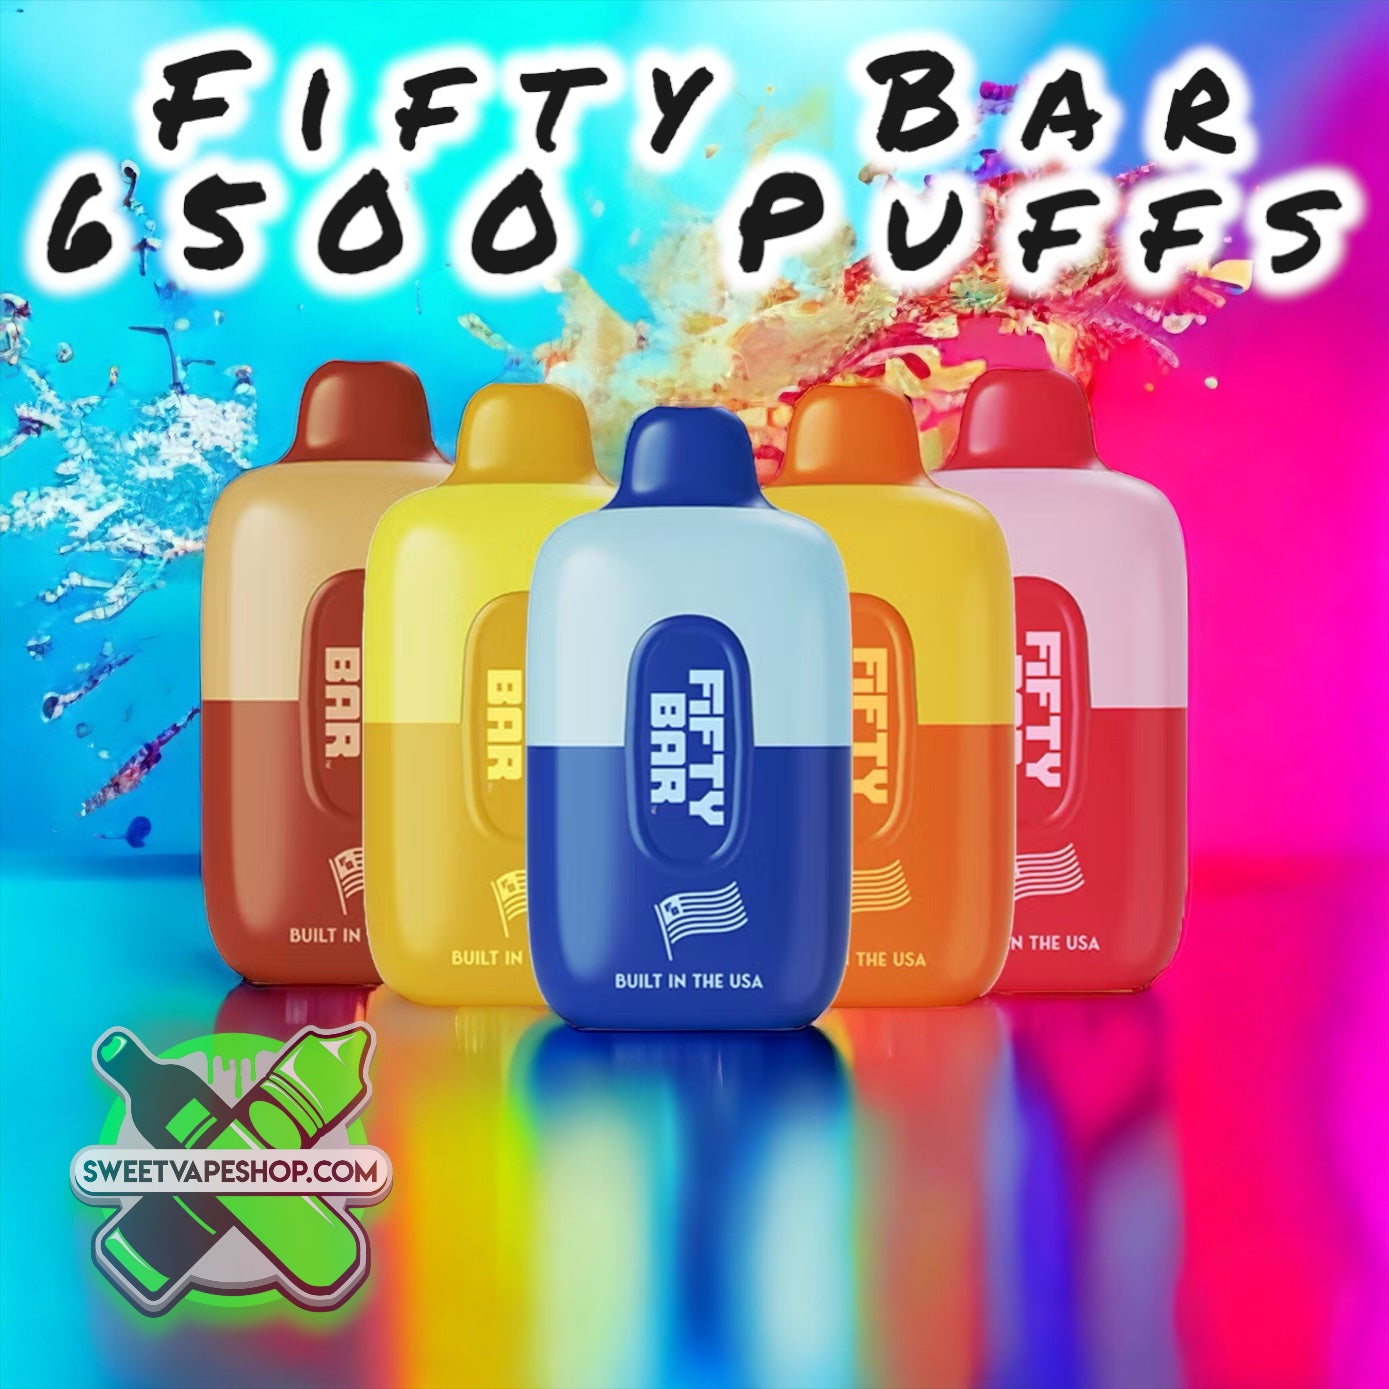 Fifty Bar - 6500 Puffs Disposable